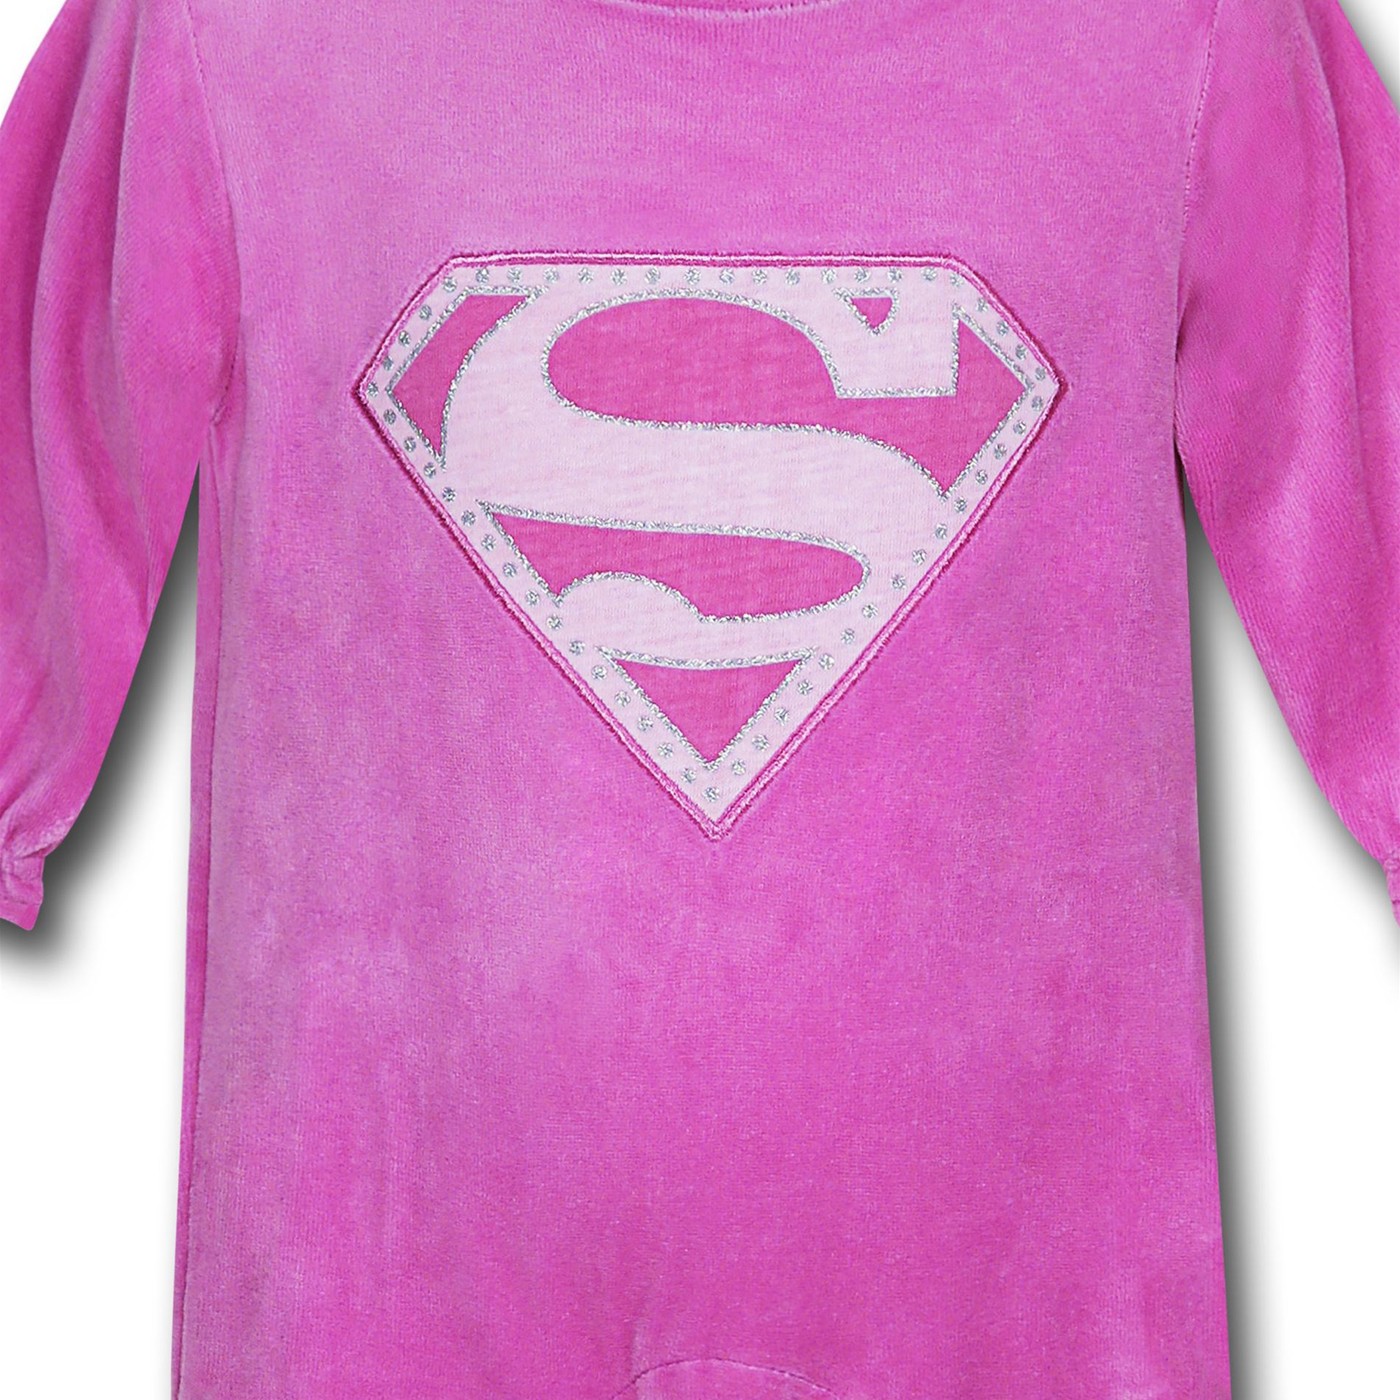 Supergirl Newborn Pink Coverall